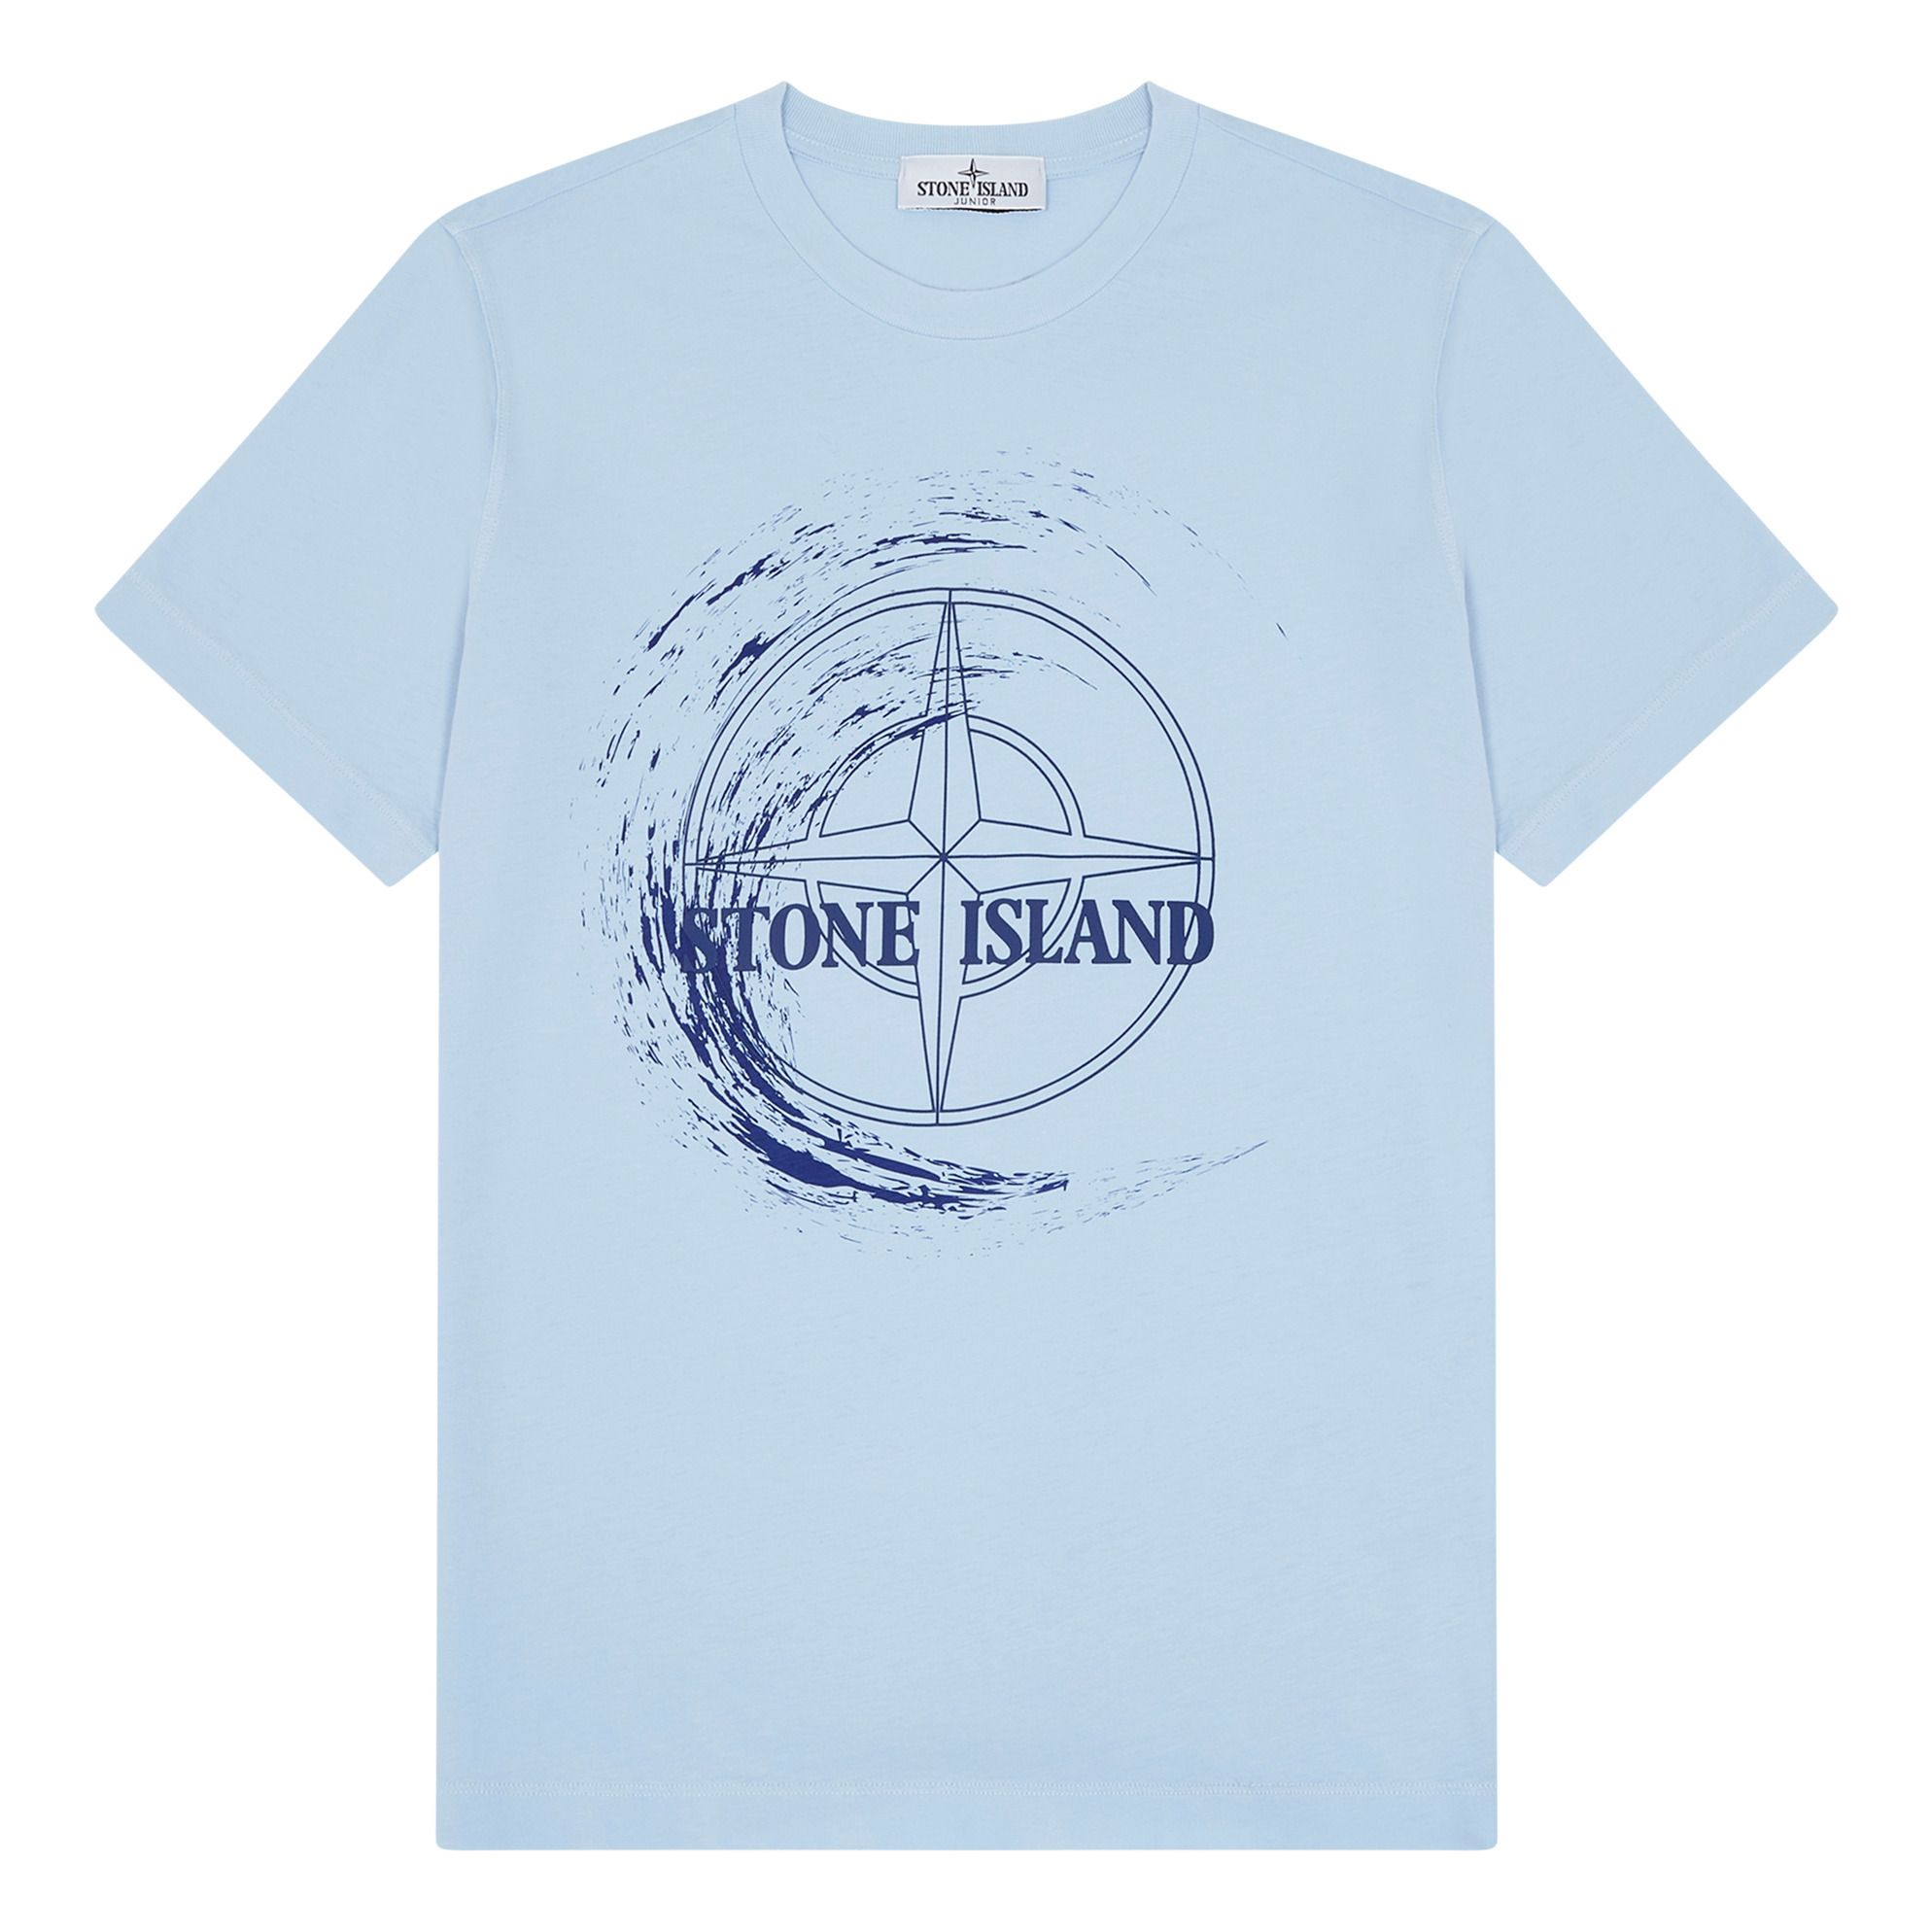 Stone Island - T-shirt Illustration - Fille - Bleu